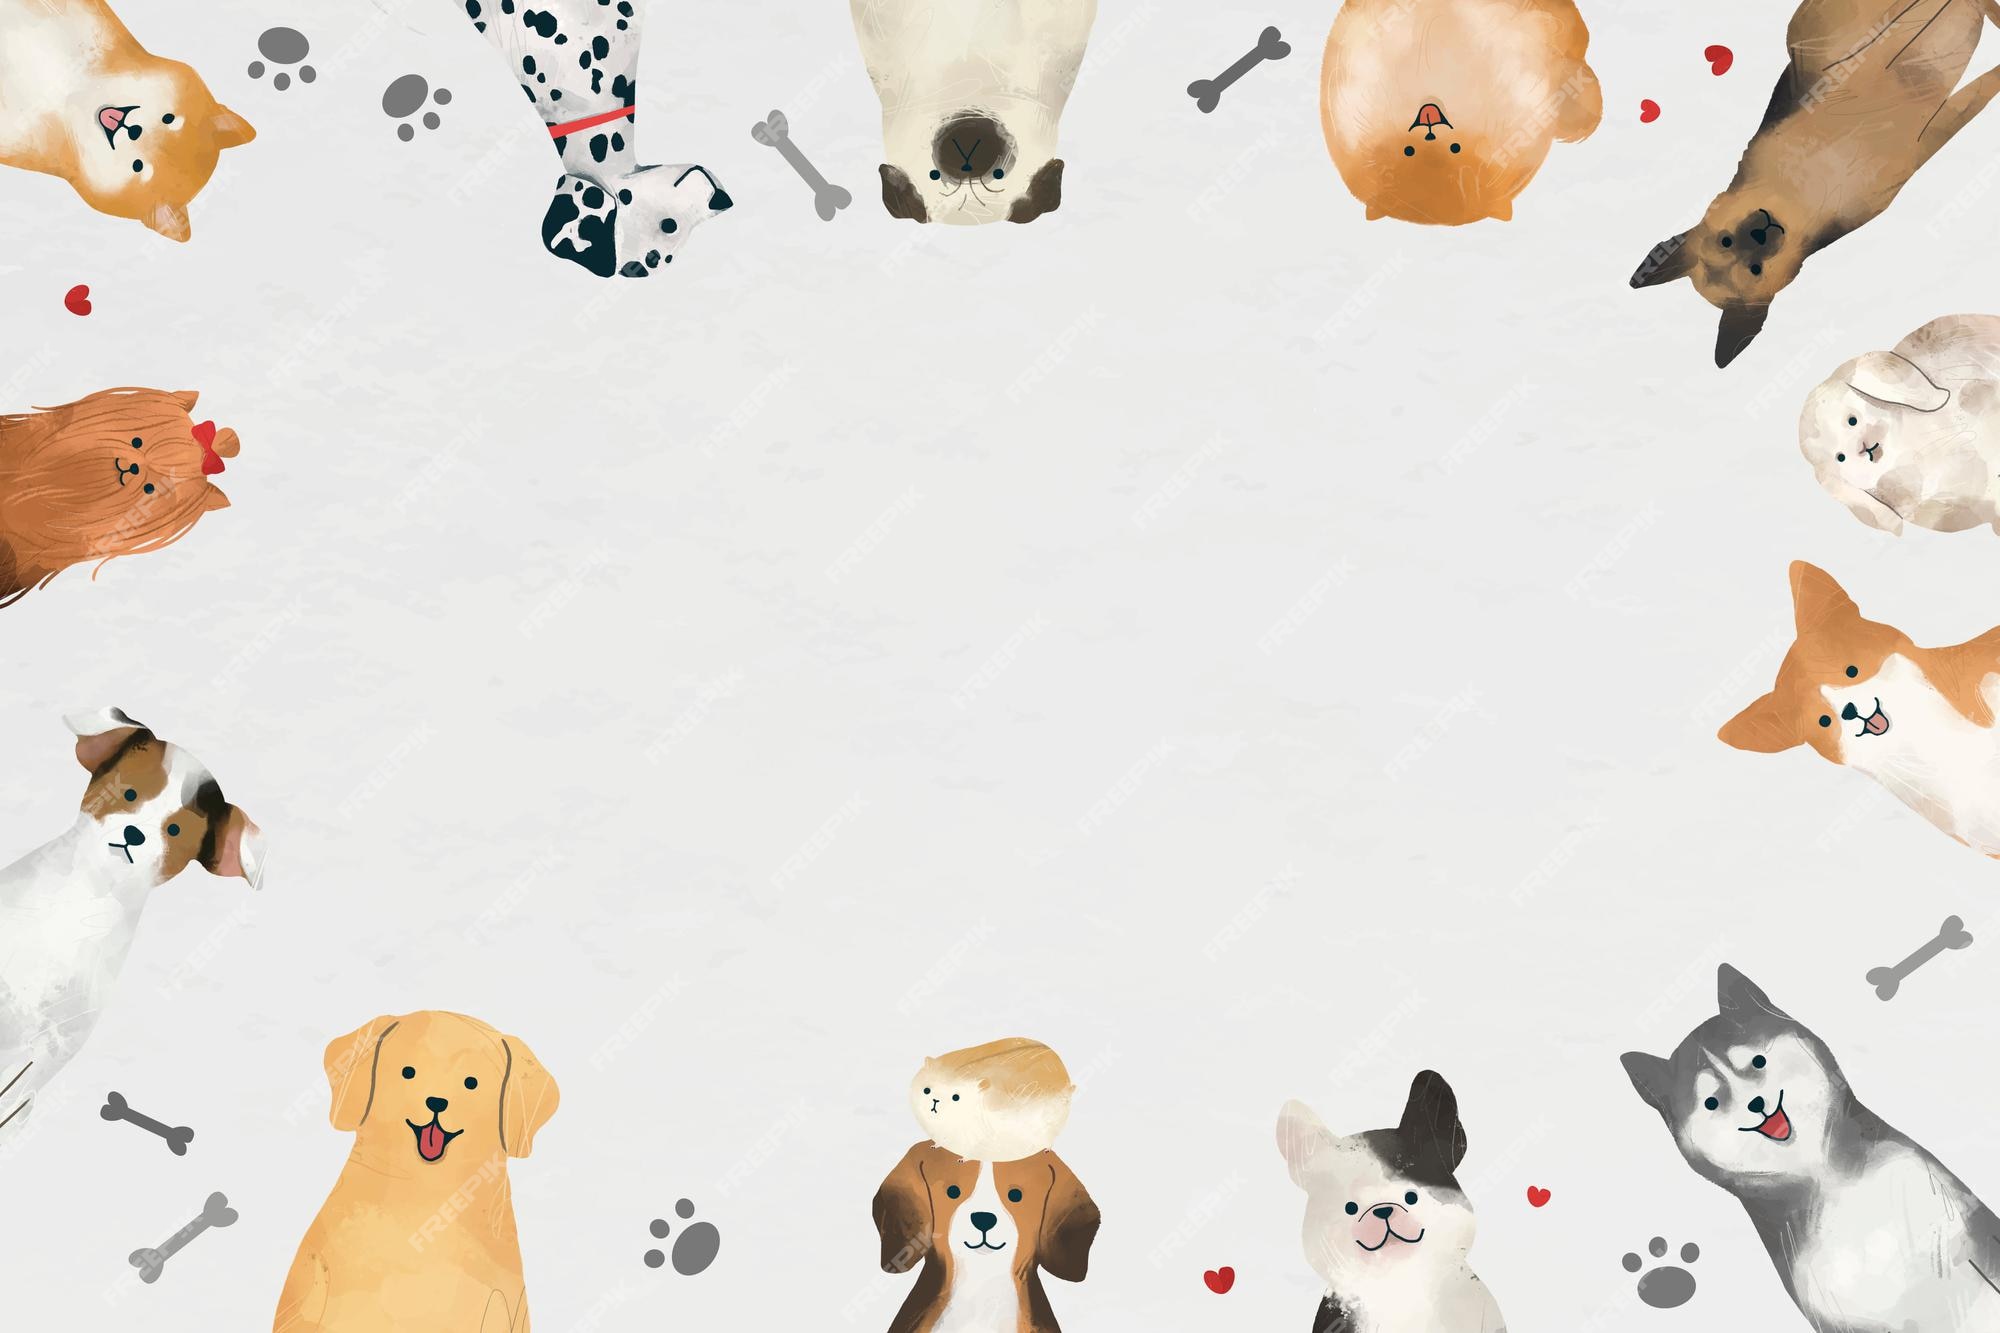 Pets Background Images - Free Download on Freepik